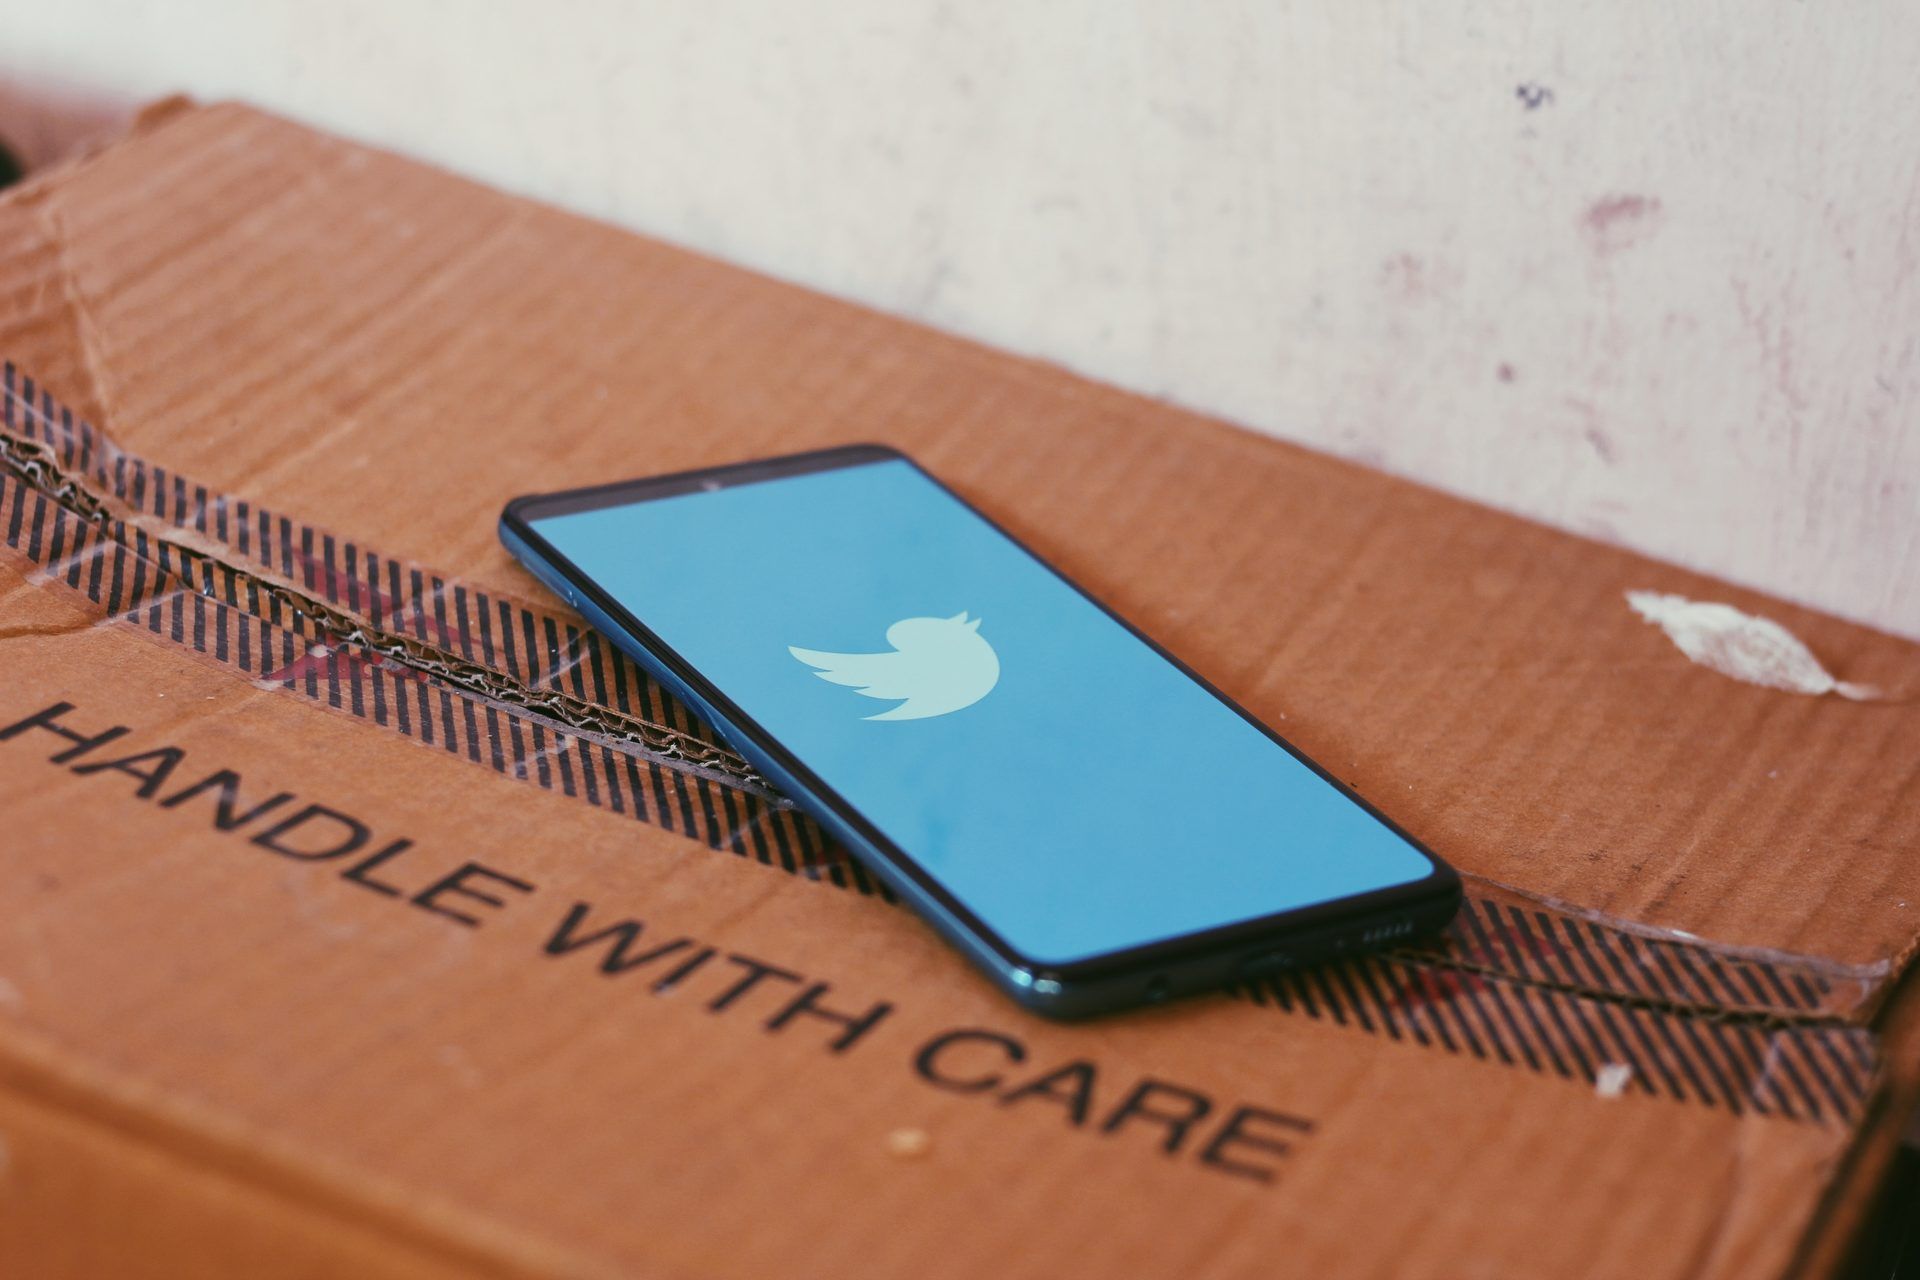 400 million Twitter accounts' data is on Christmas sale